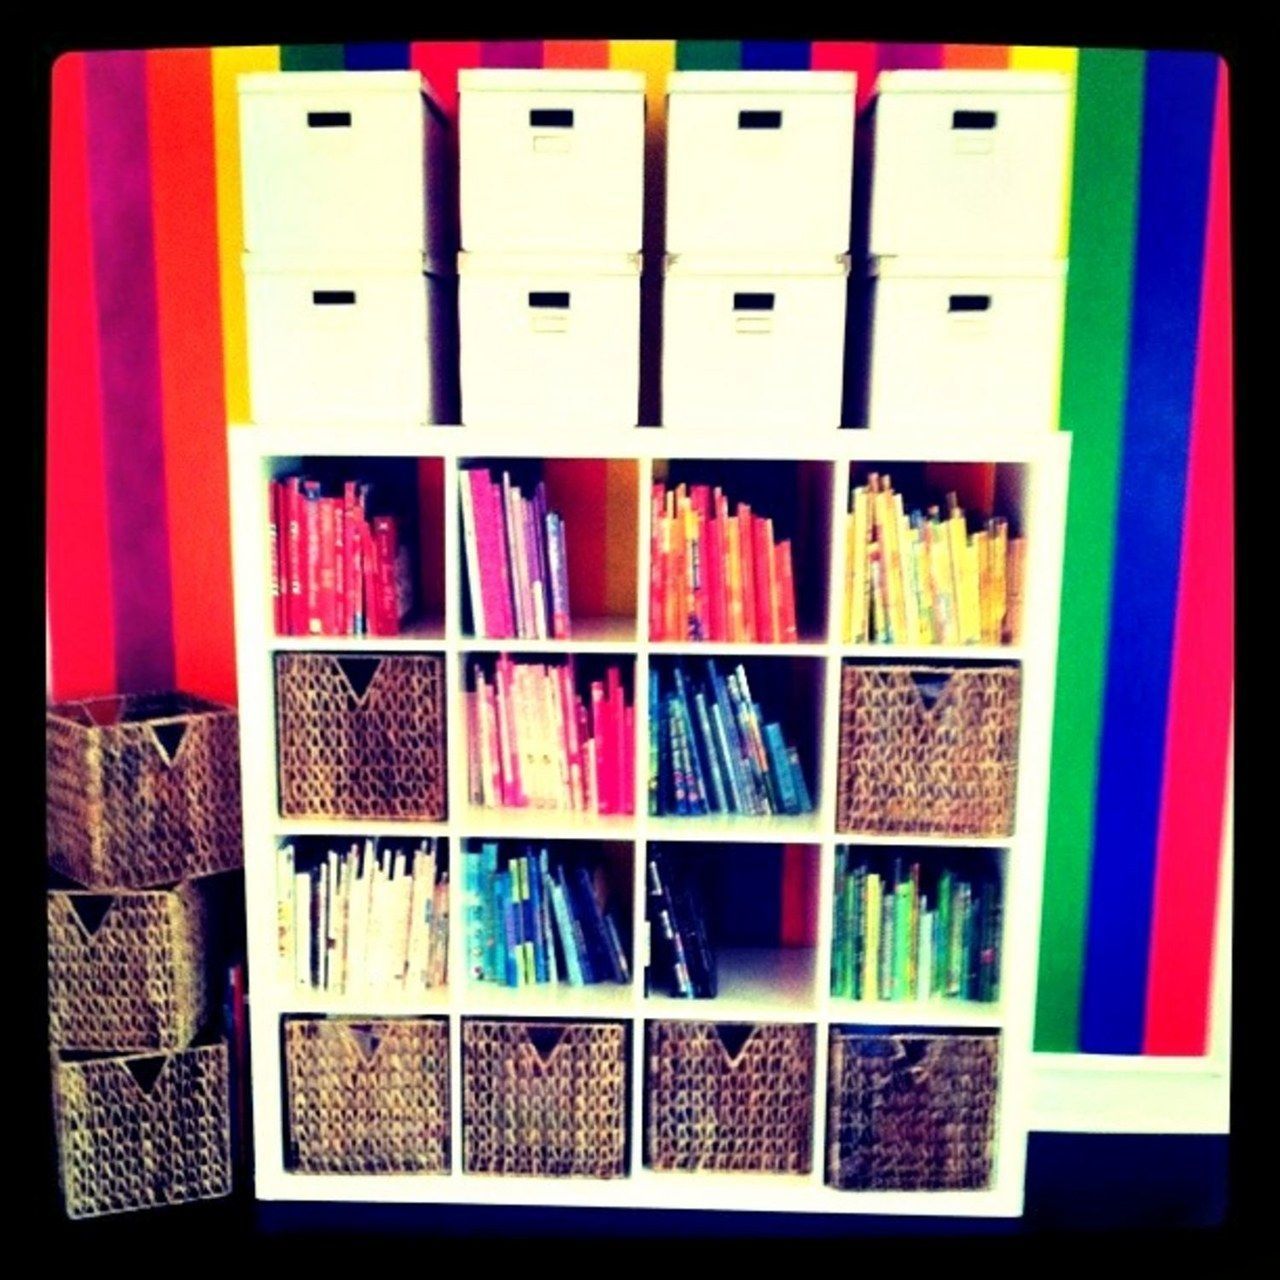 马戏团 moon frye rainbow bookshelf